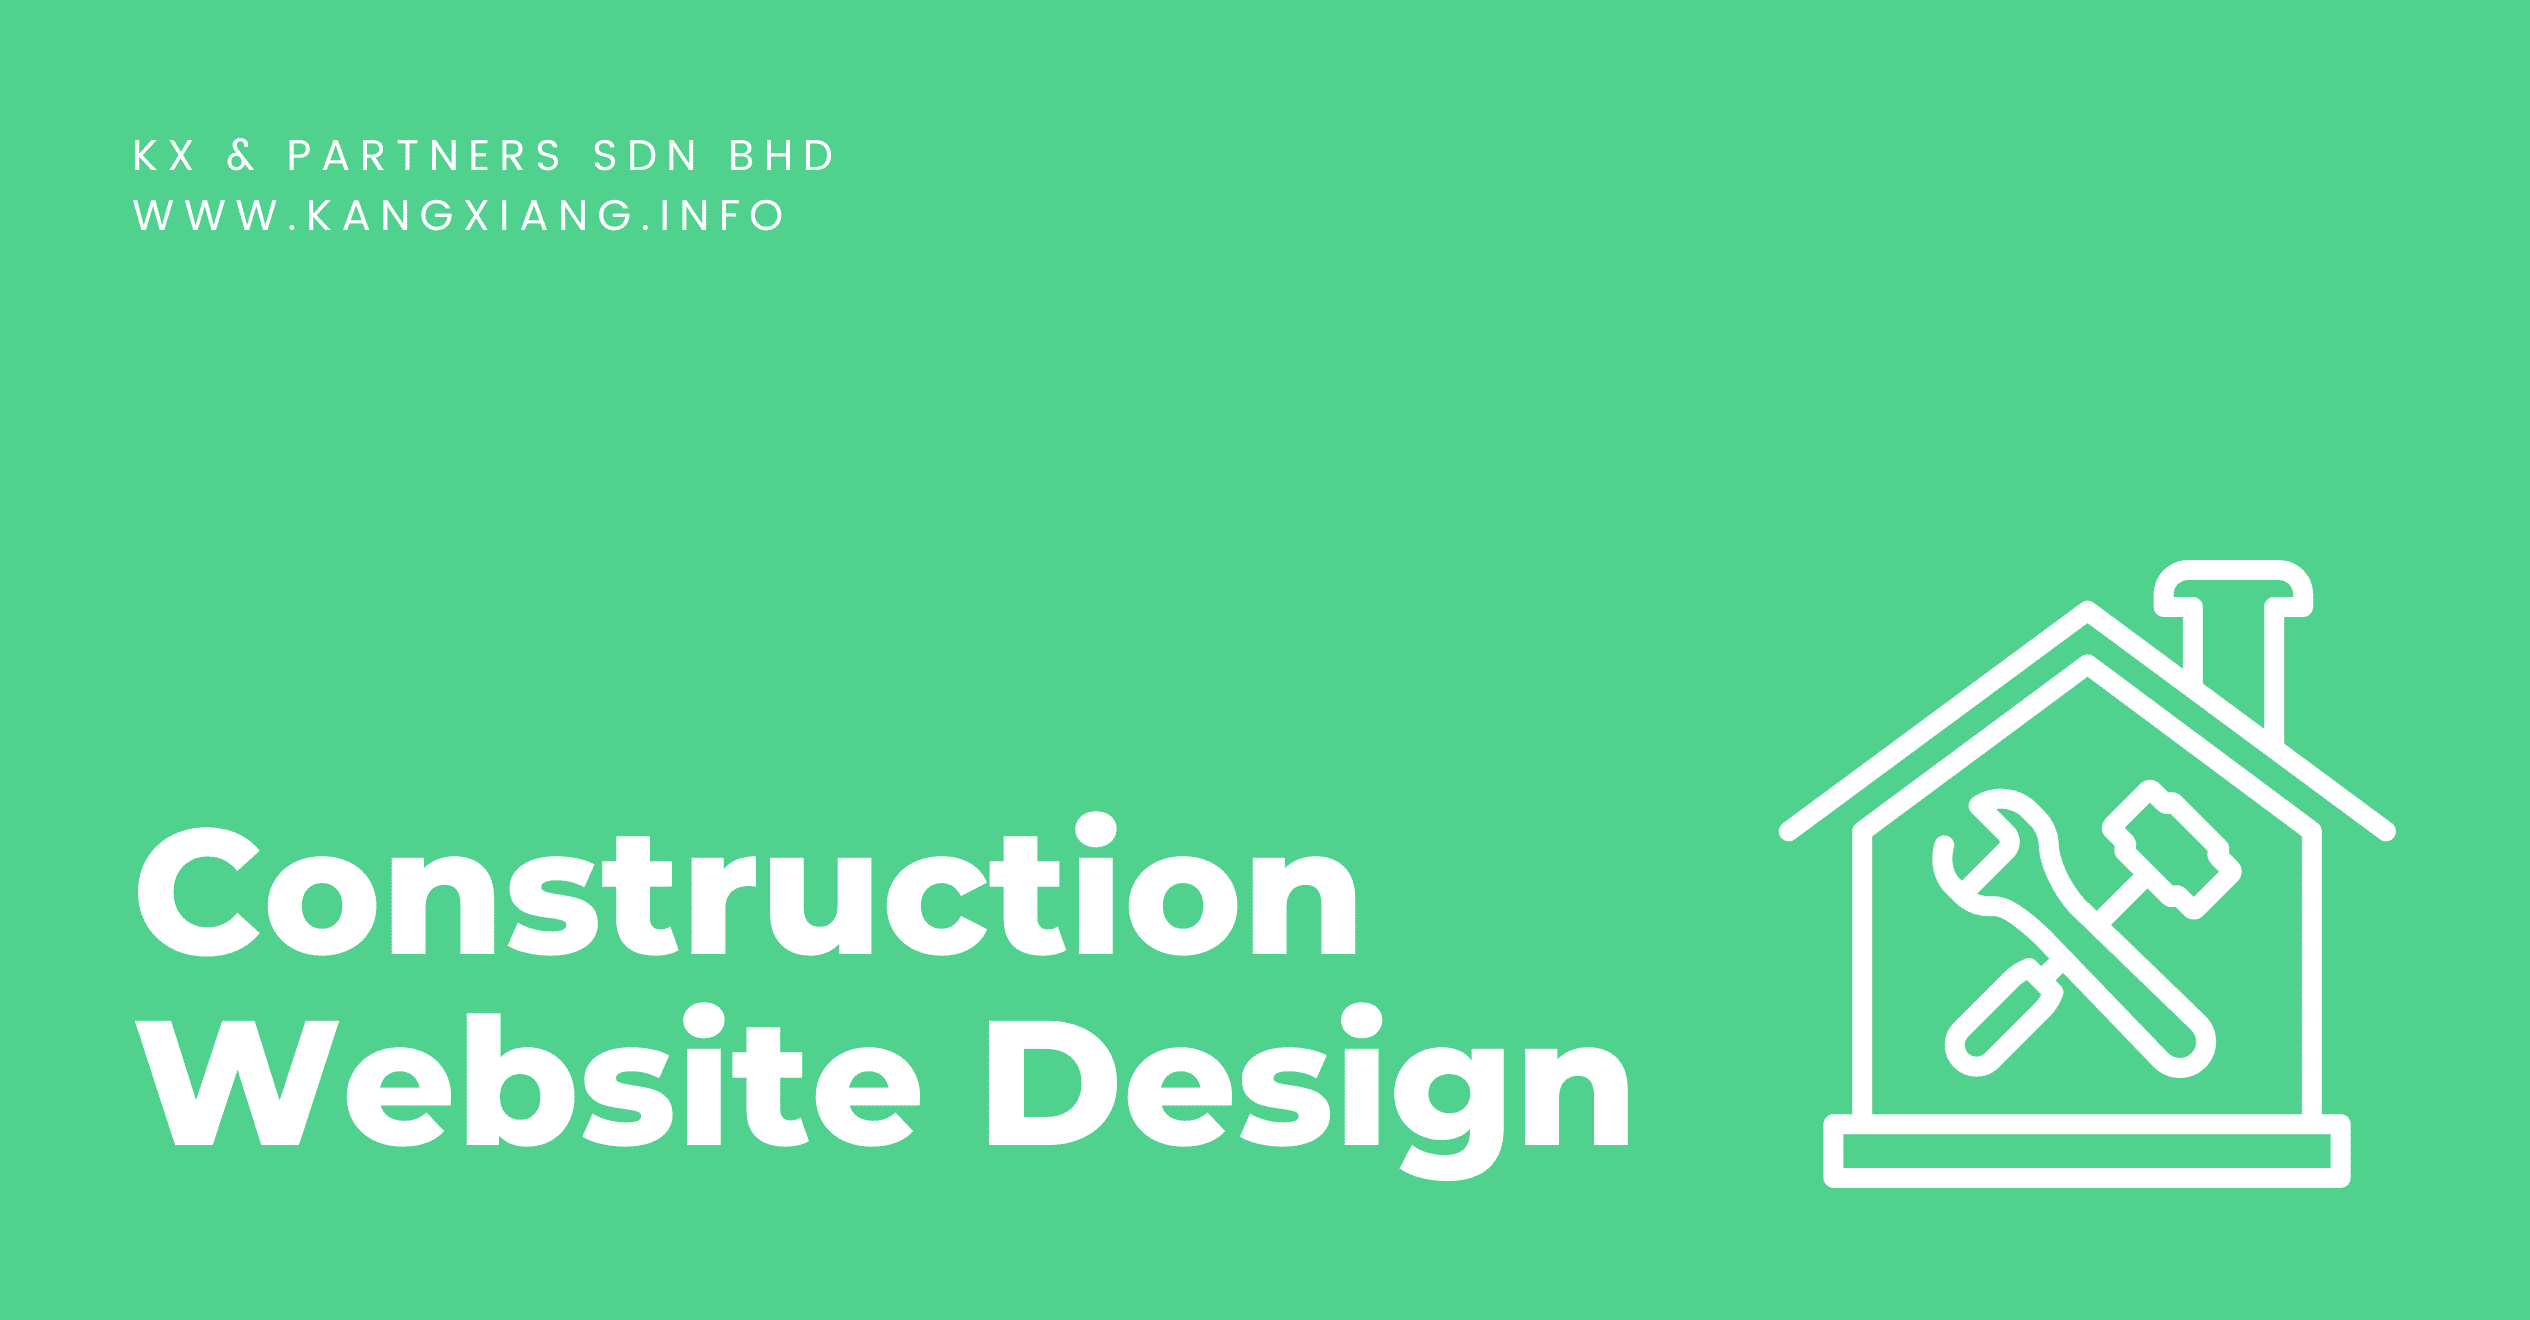 Construction Website Design Malaysia